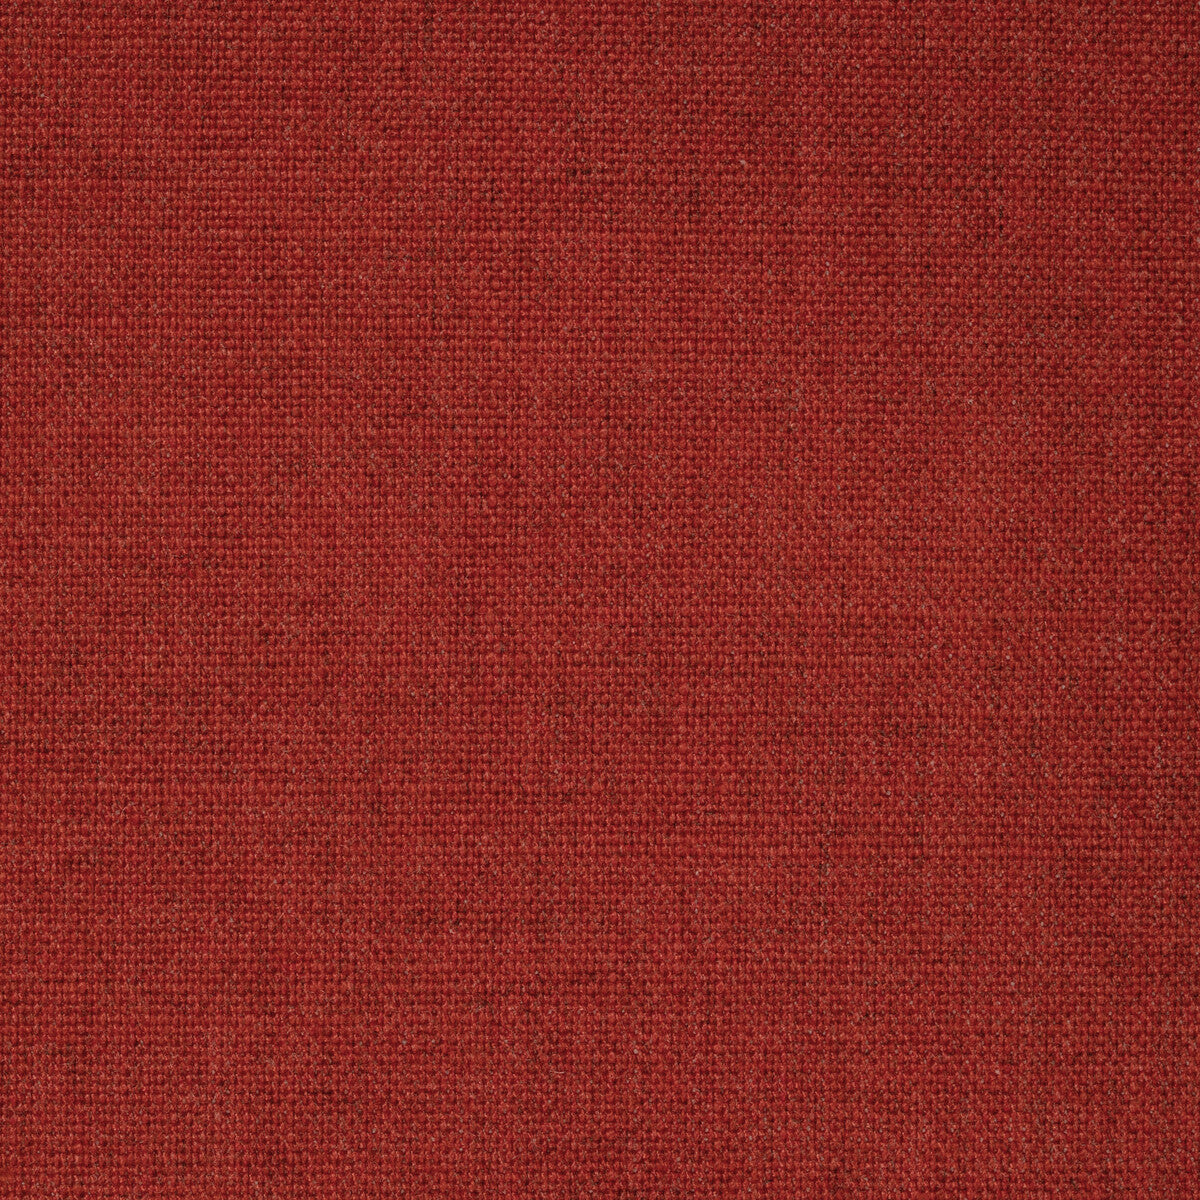 Kravet Smart fabric in 36112-19 color - pattern 36112.19.0 - by Kravet Smart in the Performance Kravetarmor collection